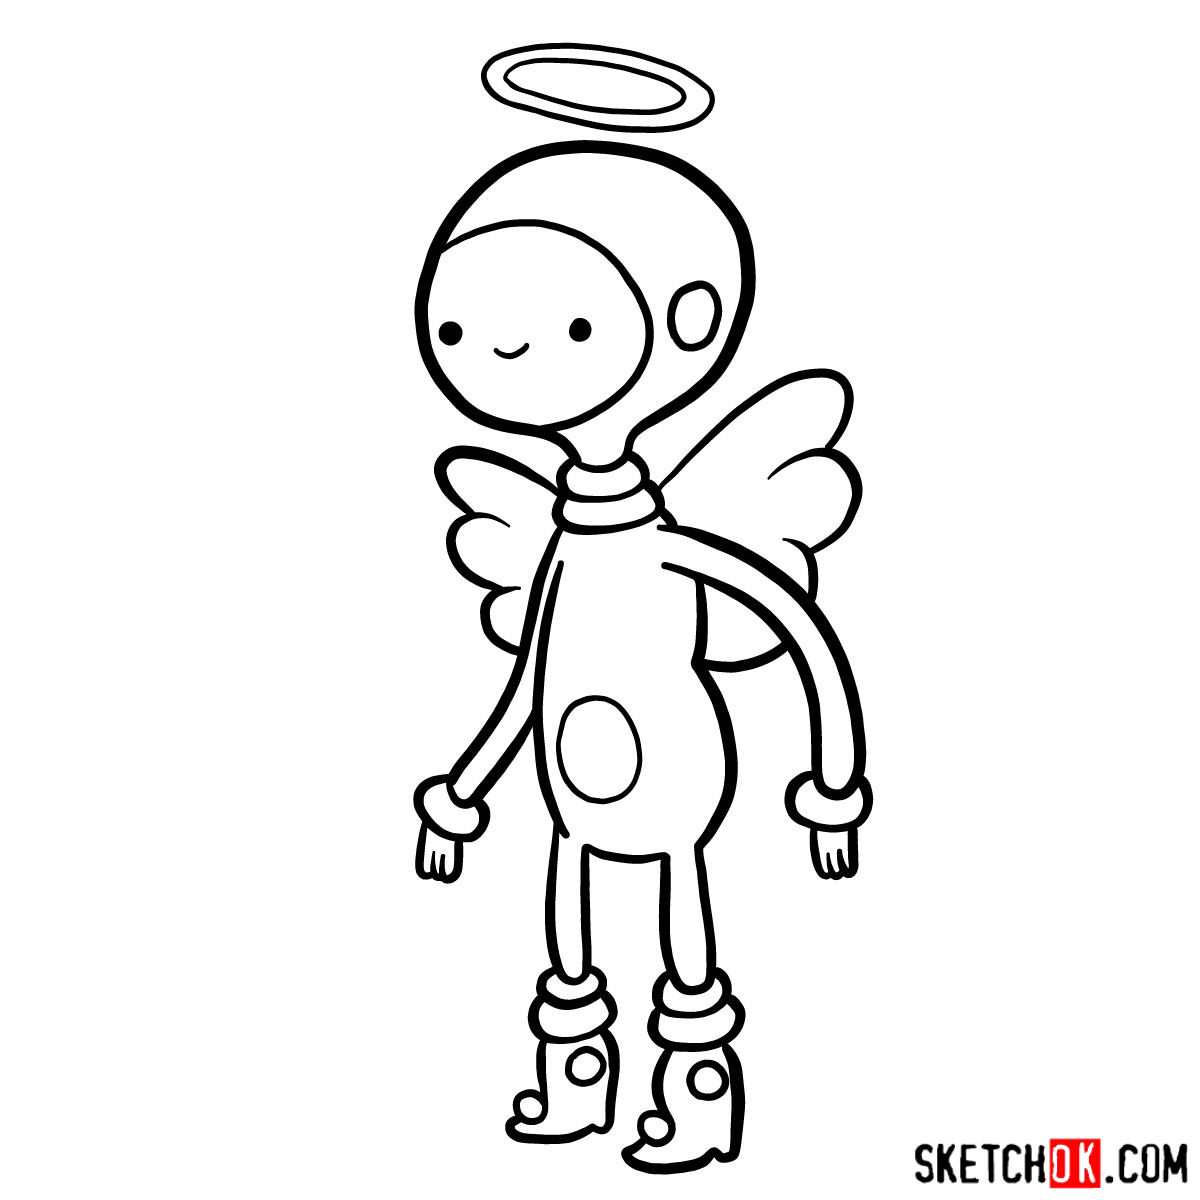 Space Angel Princess coloring page – Free Printable PDF